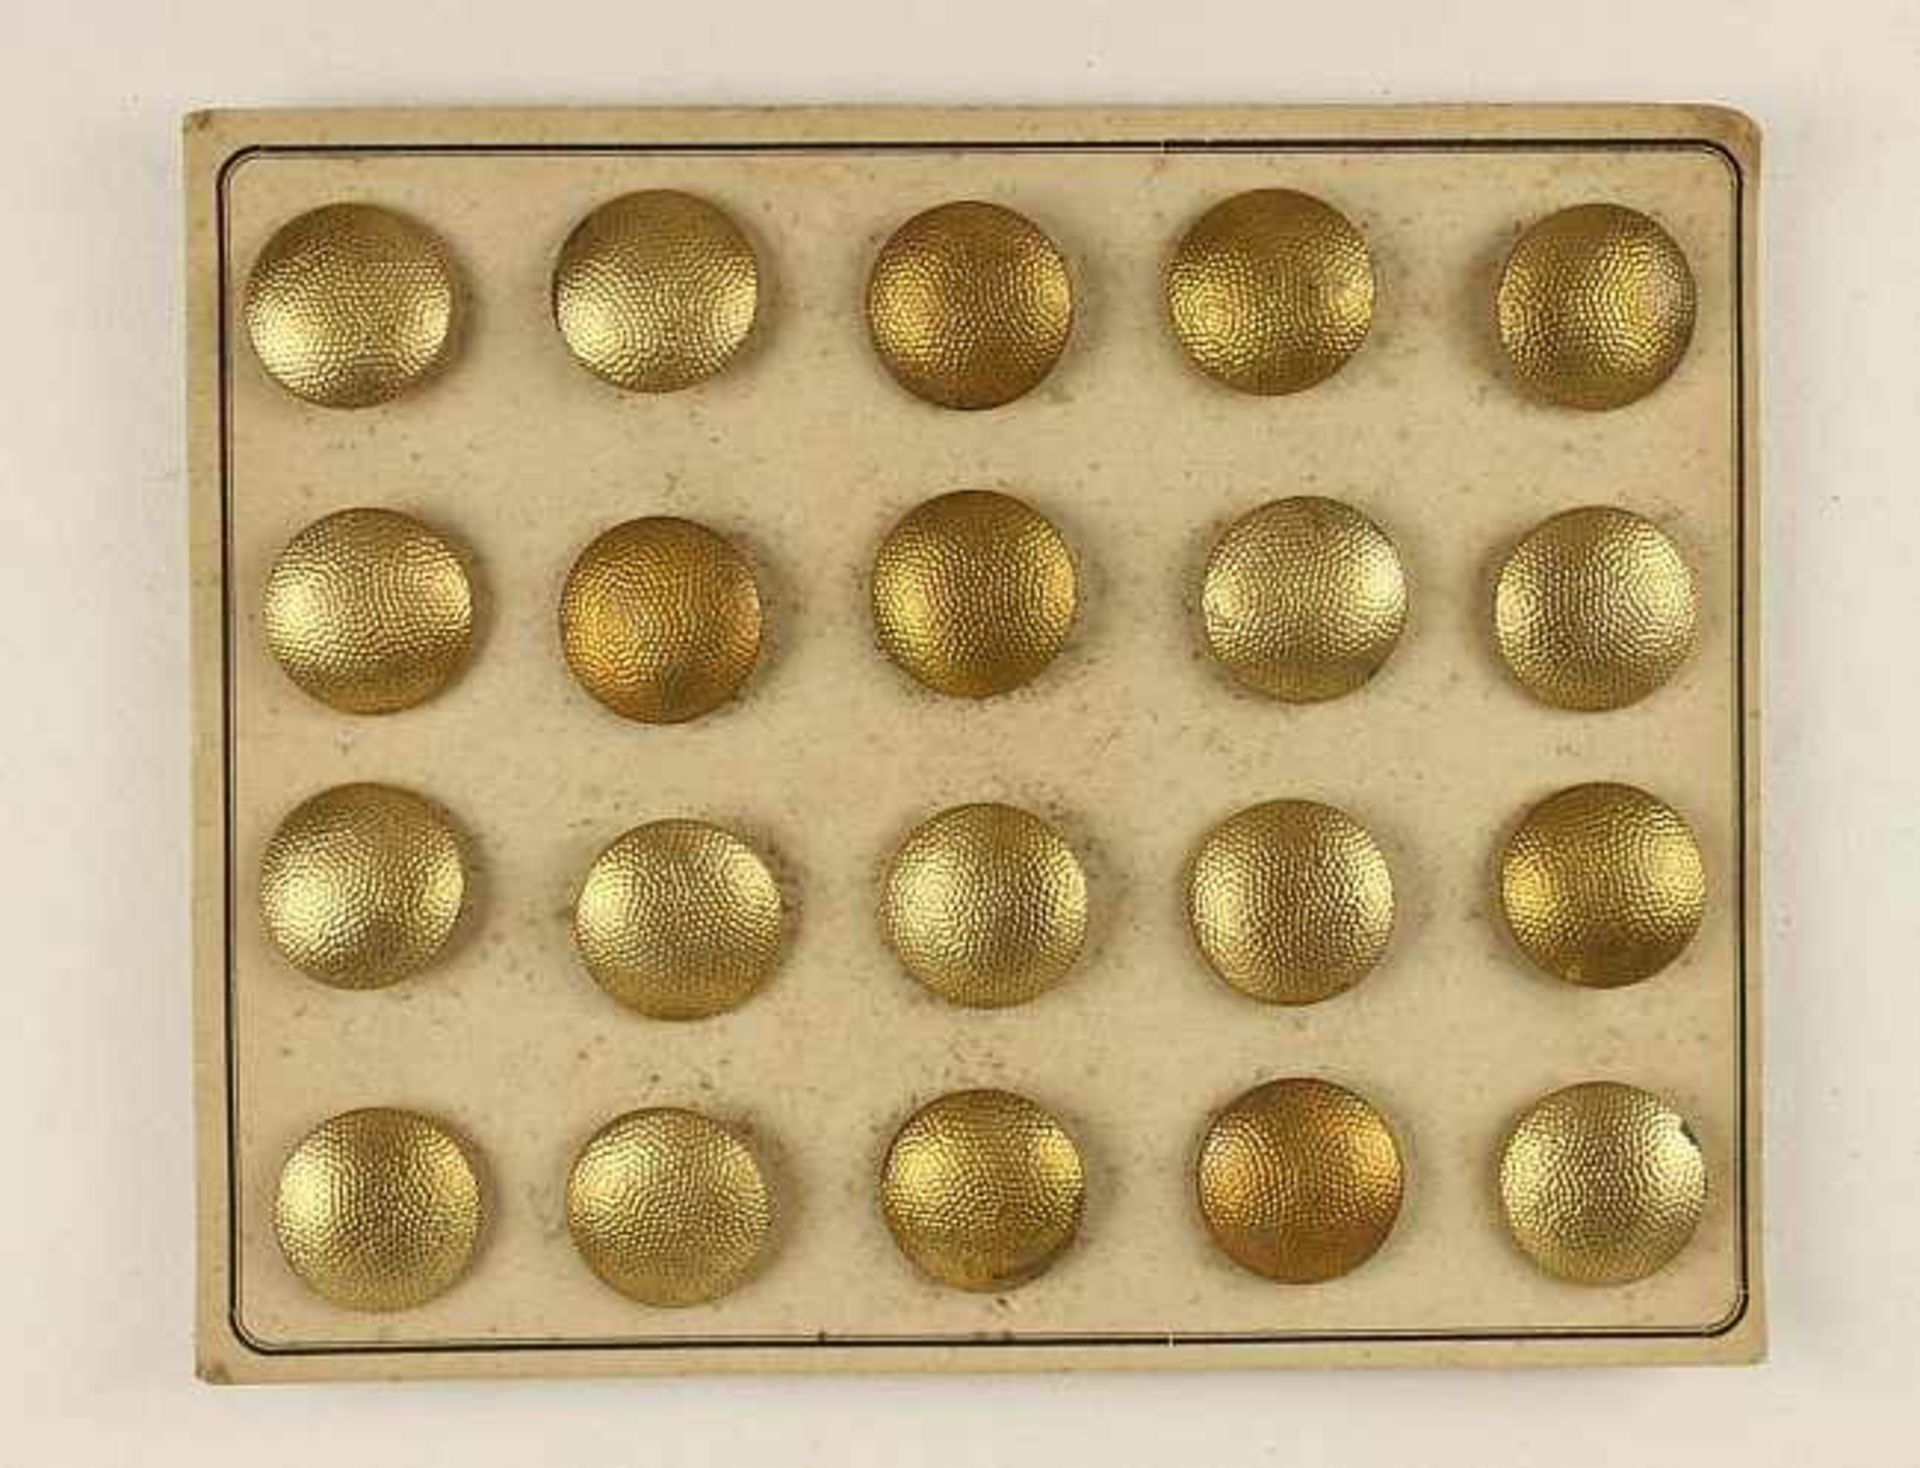 20 vergoldete Knöpfe zur Uniformjacke der Generale des Heeres, 22mm, rückseitig Aluminium "Extra